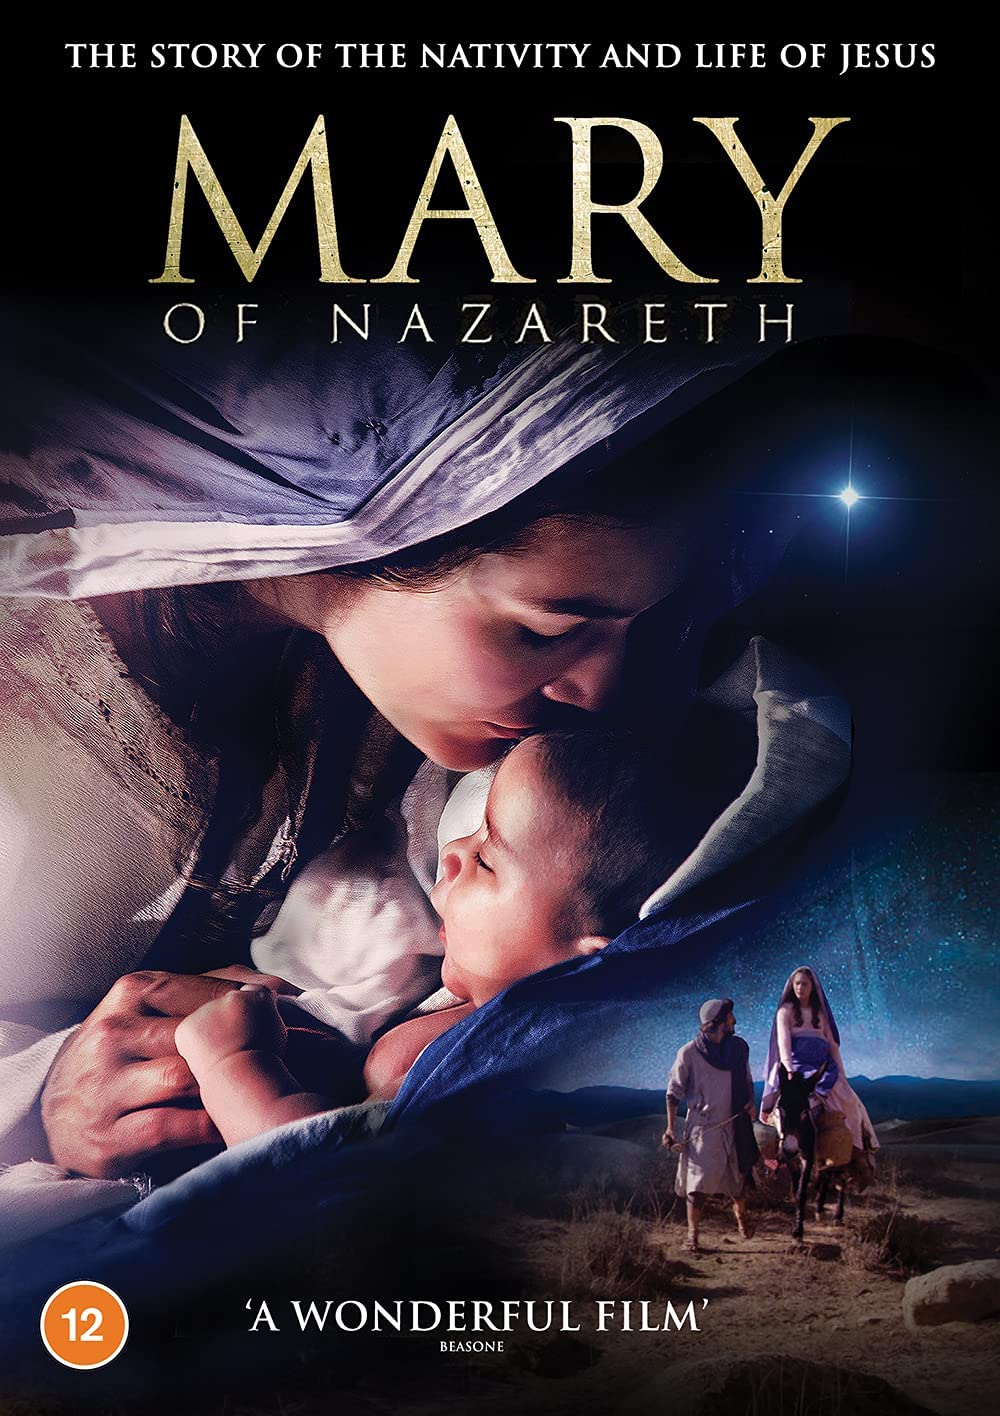 Mary of Nazareth ( The story of the Nativity and life of Jesus ) Award Winning Film - Drama/Historical [DVD]